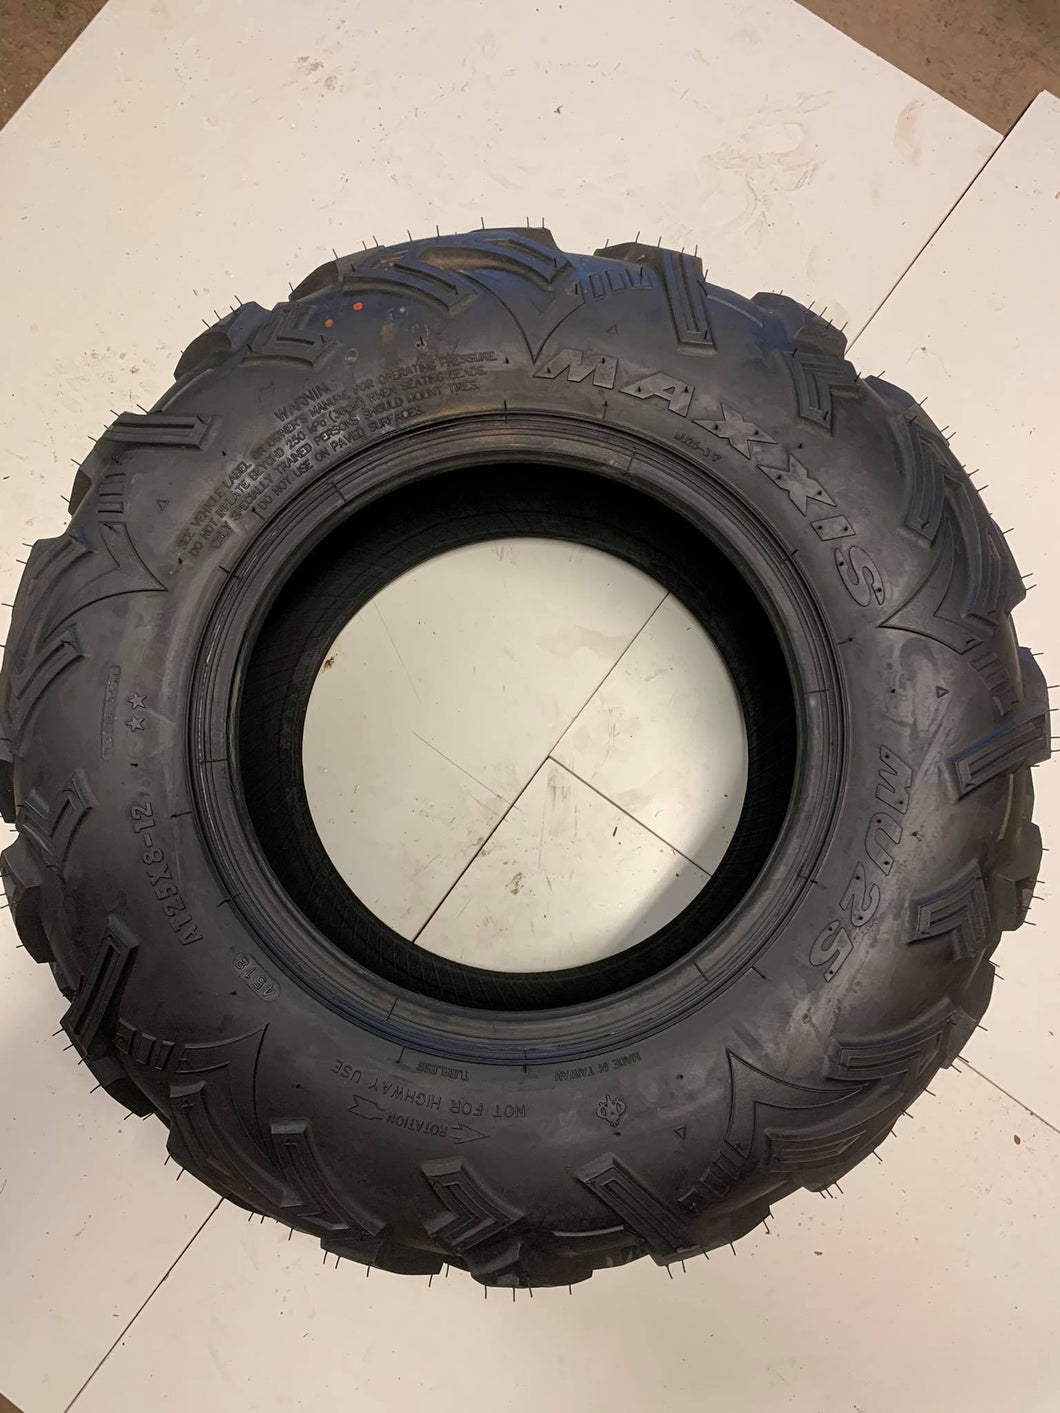 25/8/12 Maxxis Quad Tyre